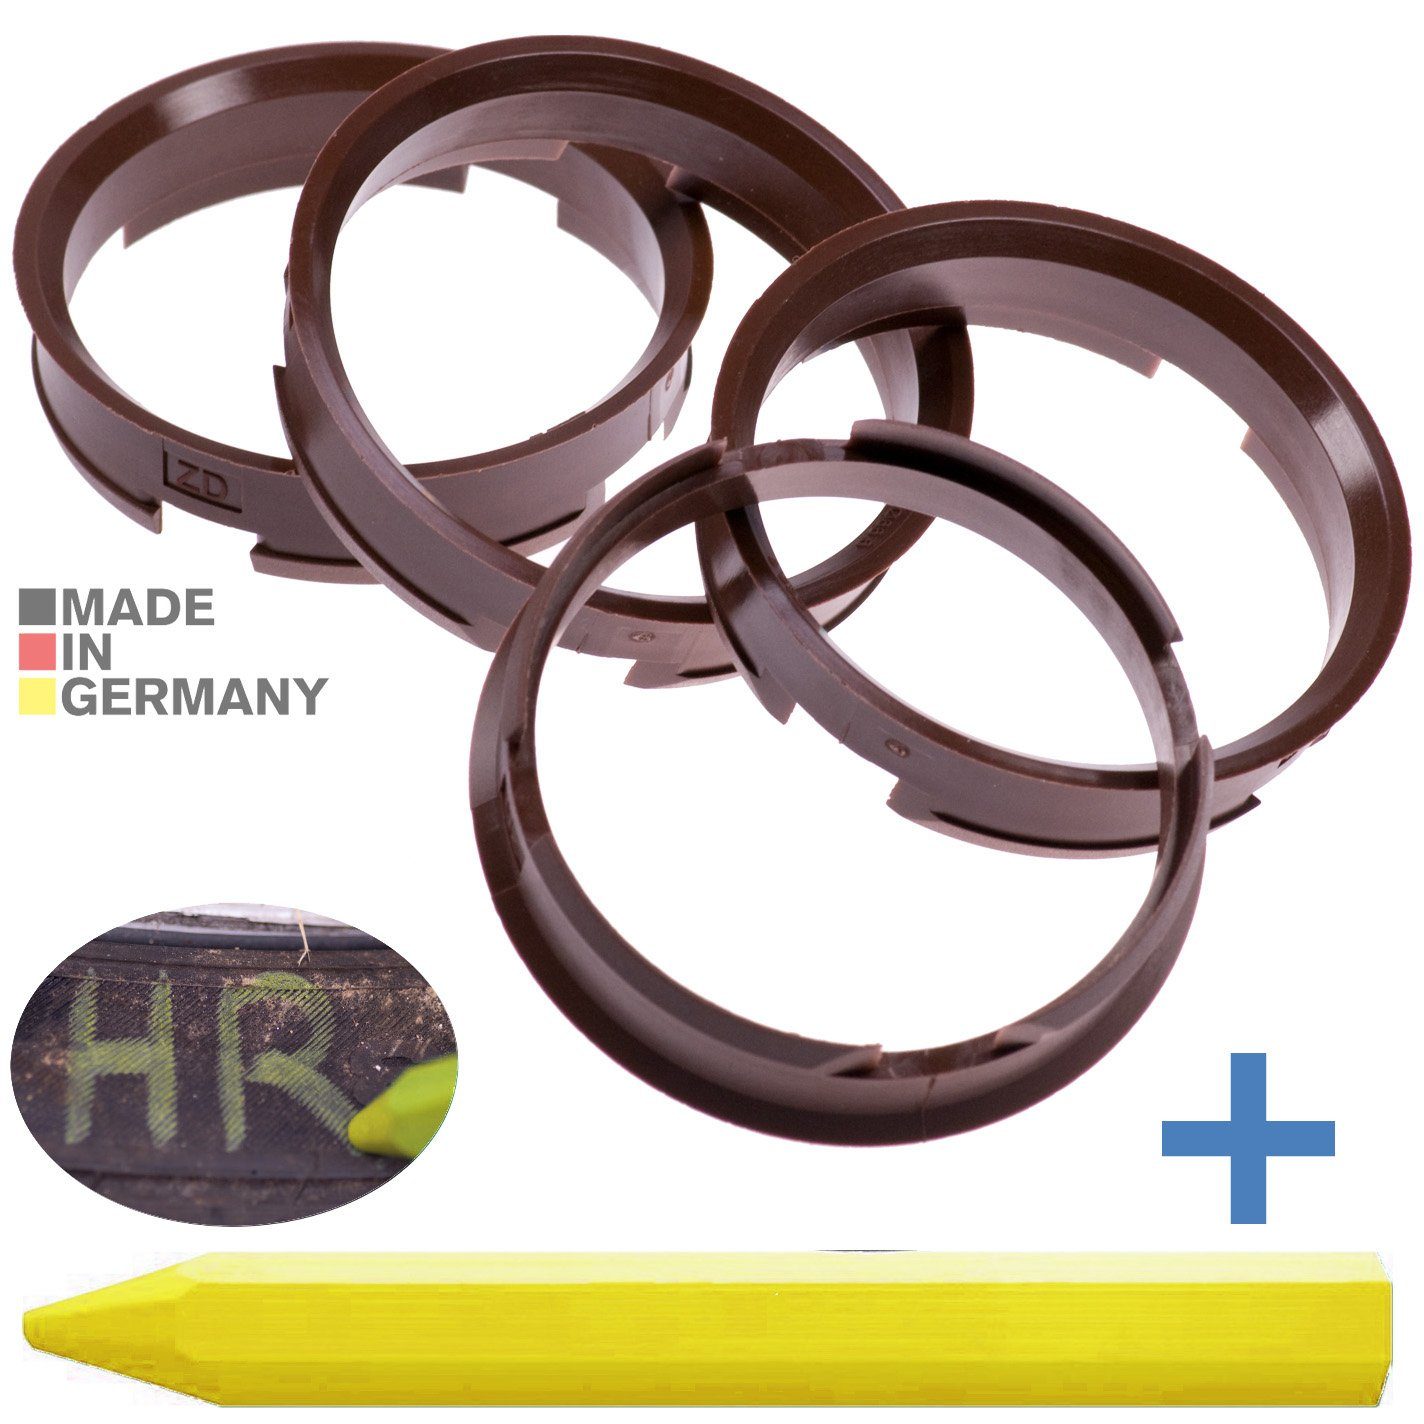 RKC Reifenstift 4X Zentrierringe Braun Felgen Ringe + 1x Reifen Kreide Fett Stift, Maße: 72,6 x 66,6 mm